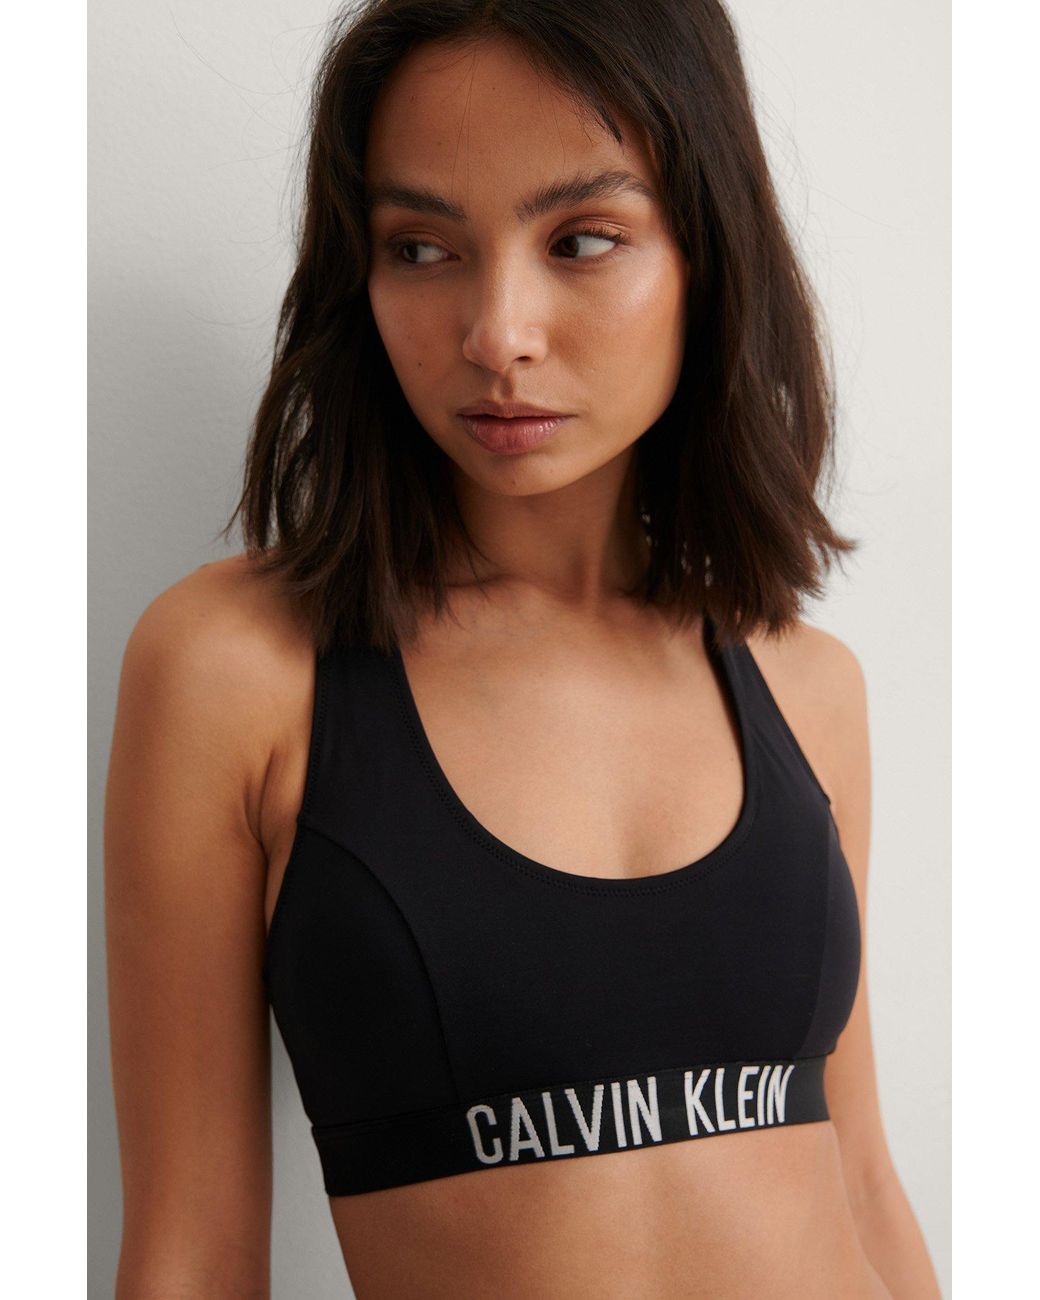 Calvin Klein Synthetic Black Bralette Swim Top - Save 39% | Lyst